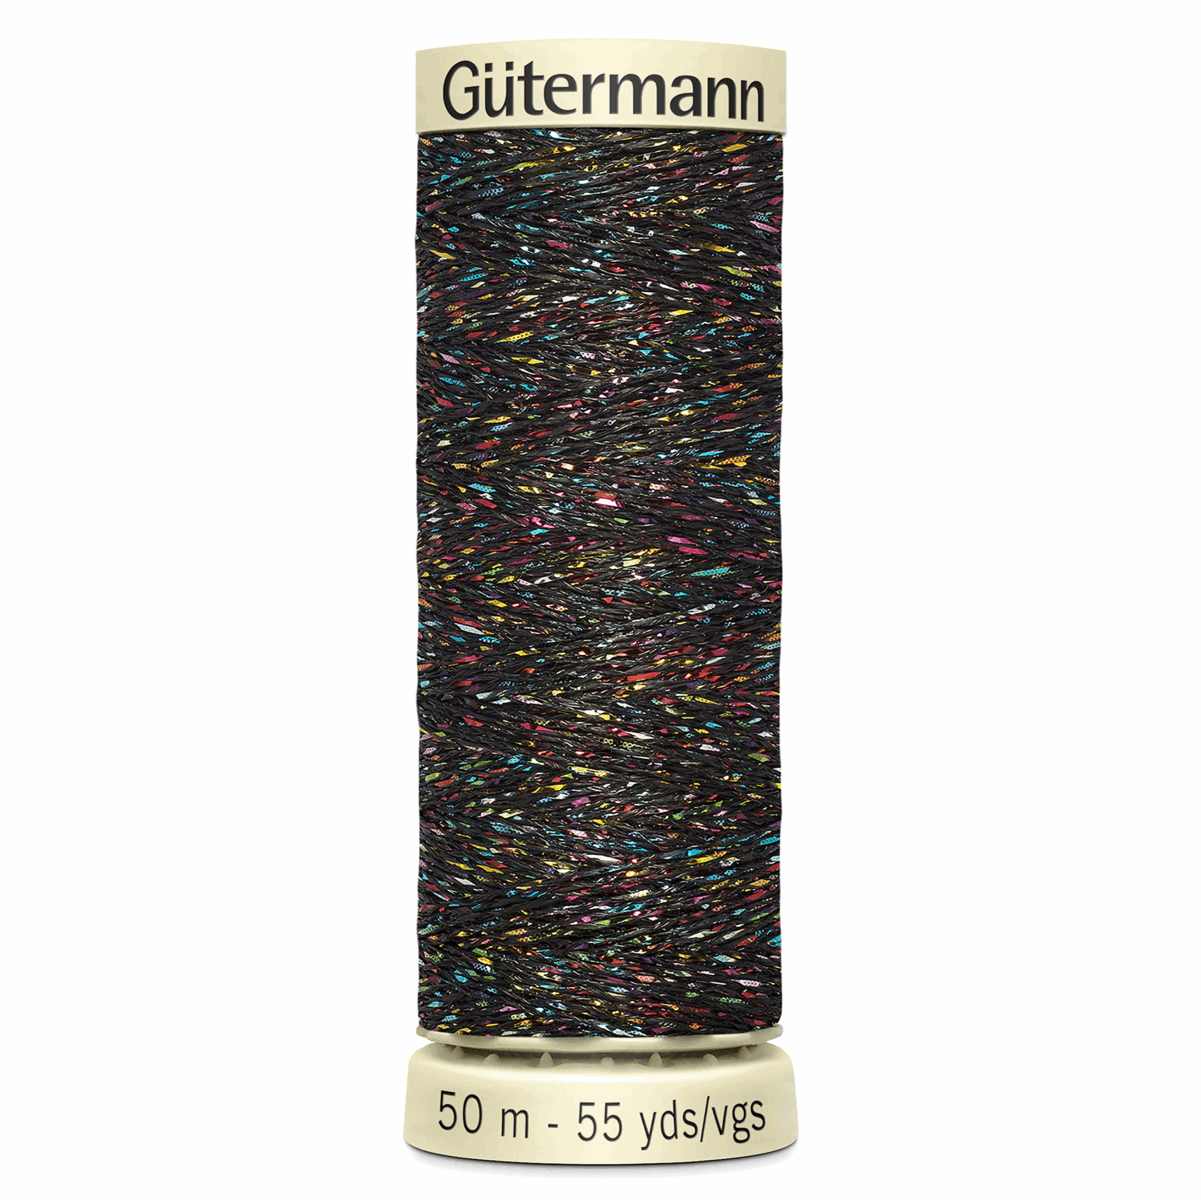 Gutermann Black Metallic Effect Thread - 50m